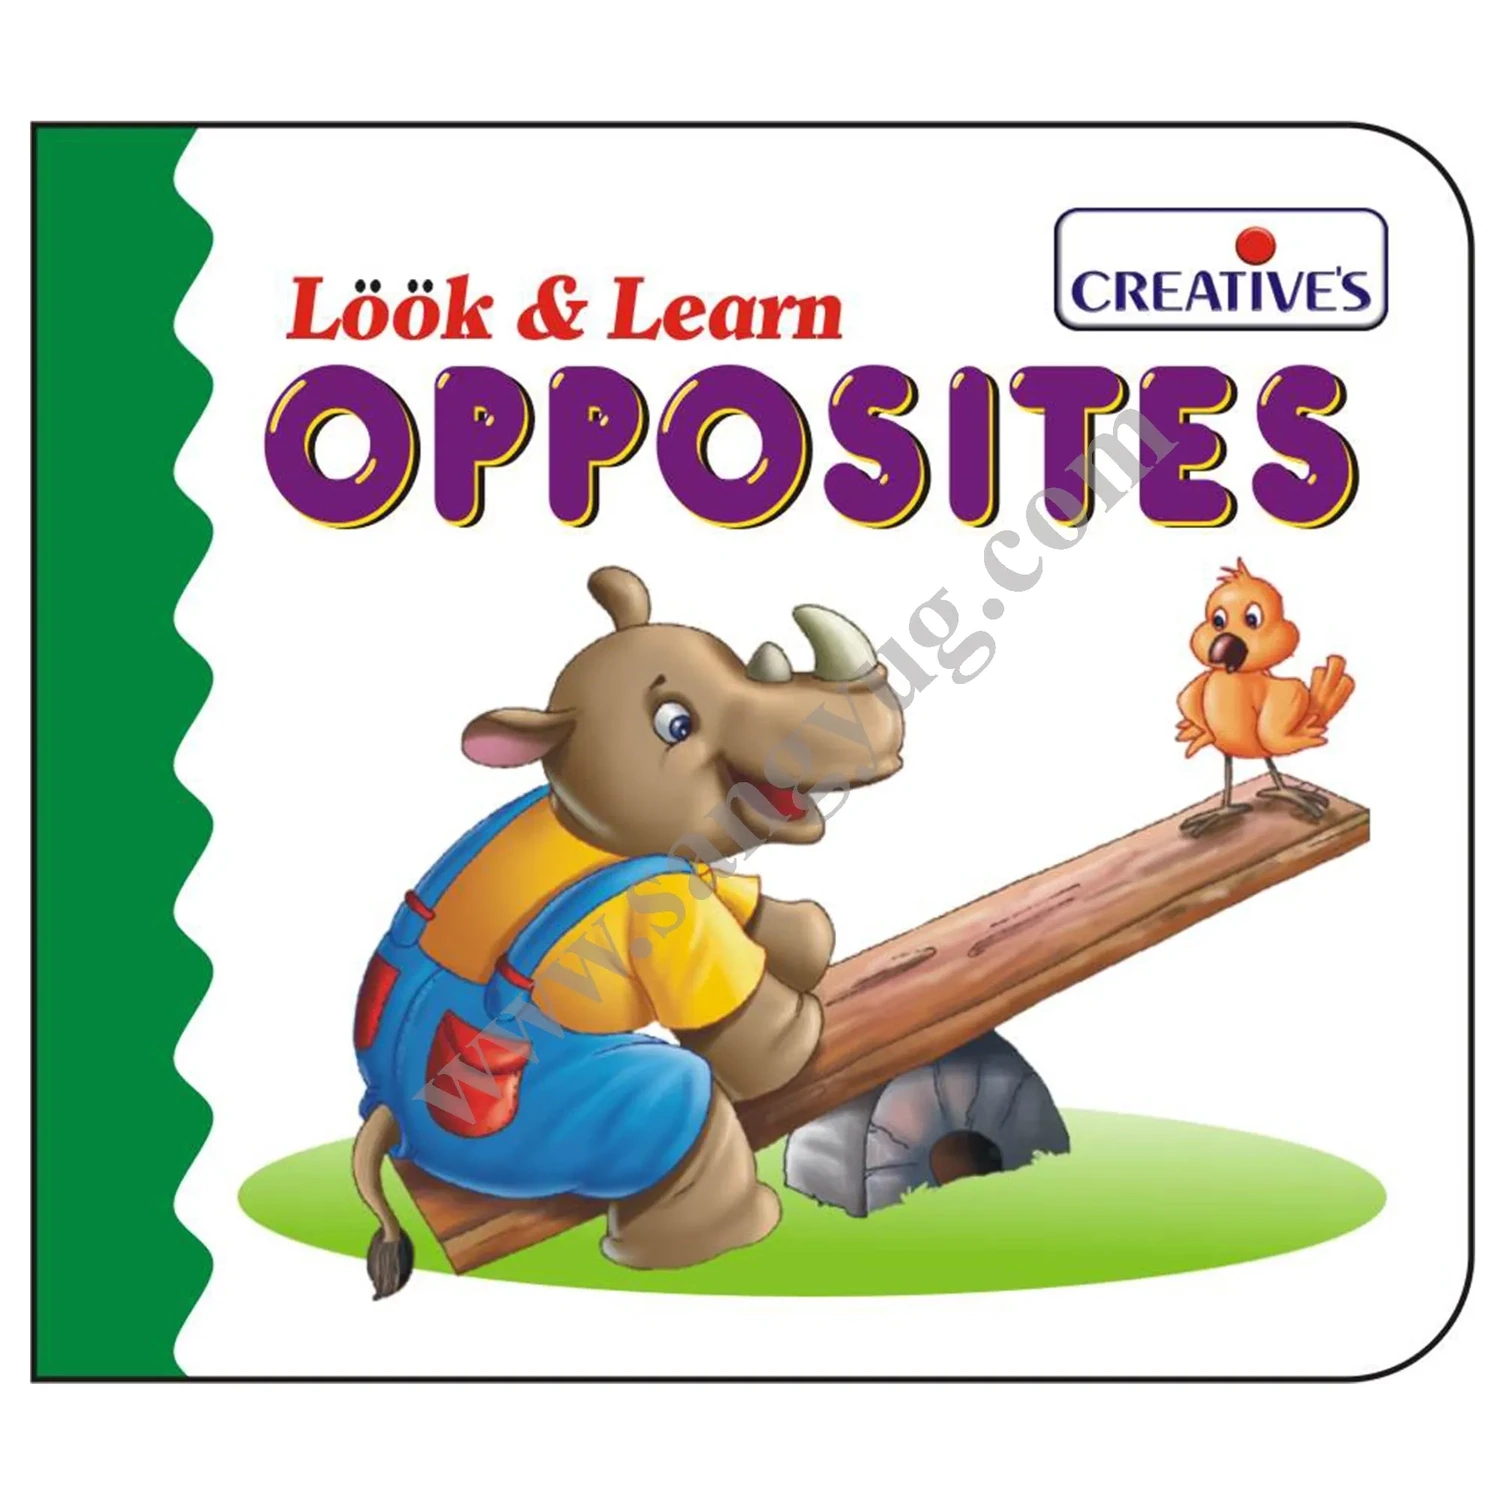 Creative look & learn board book - Opposites 526